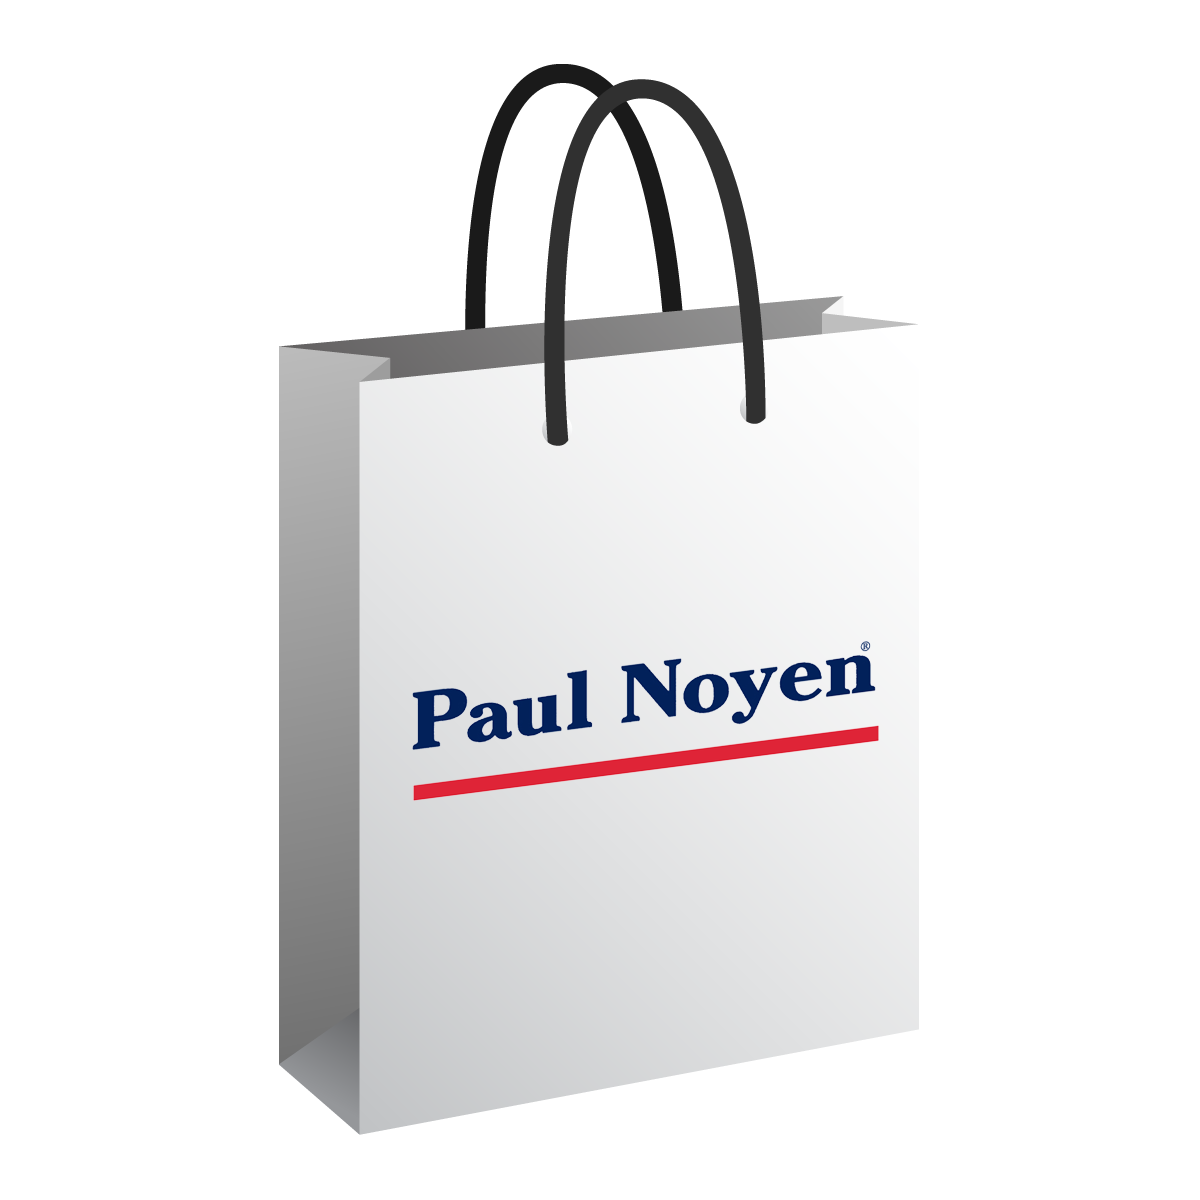 Paul Noyen